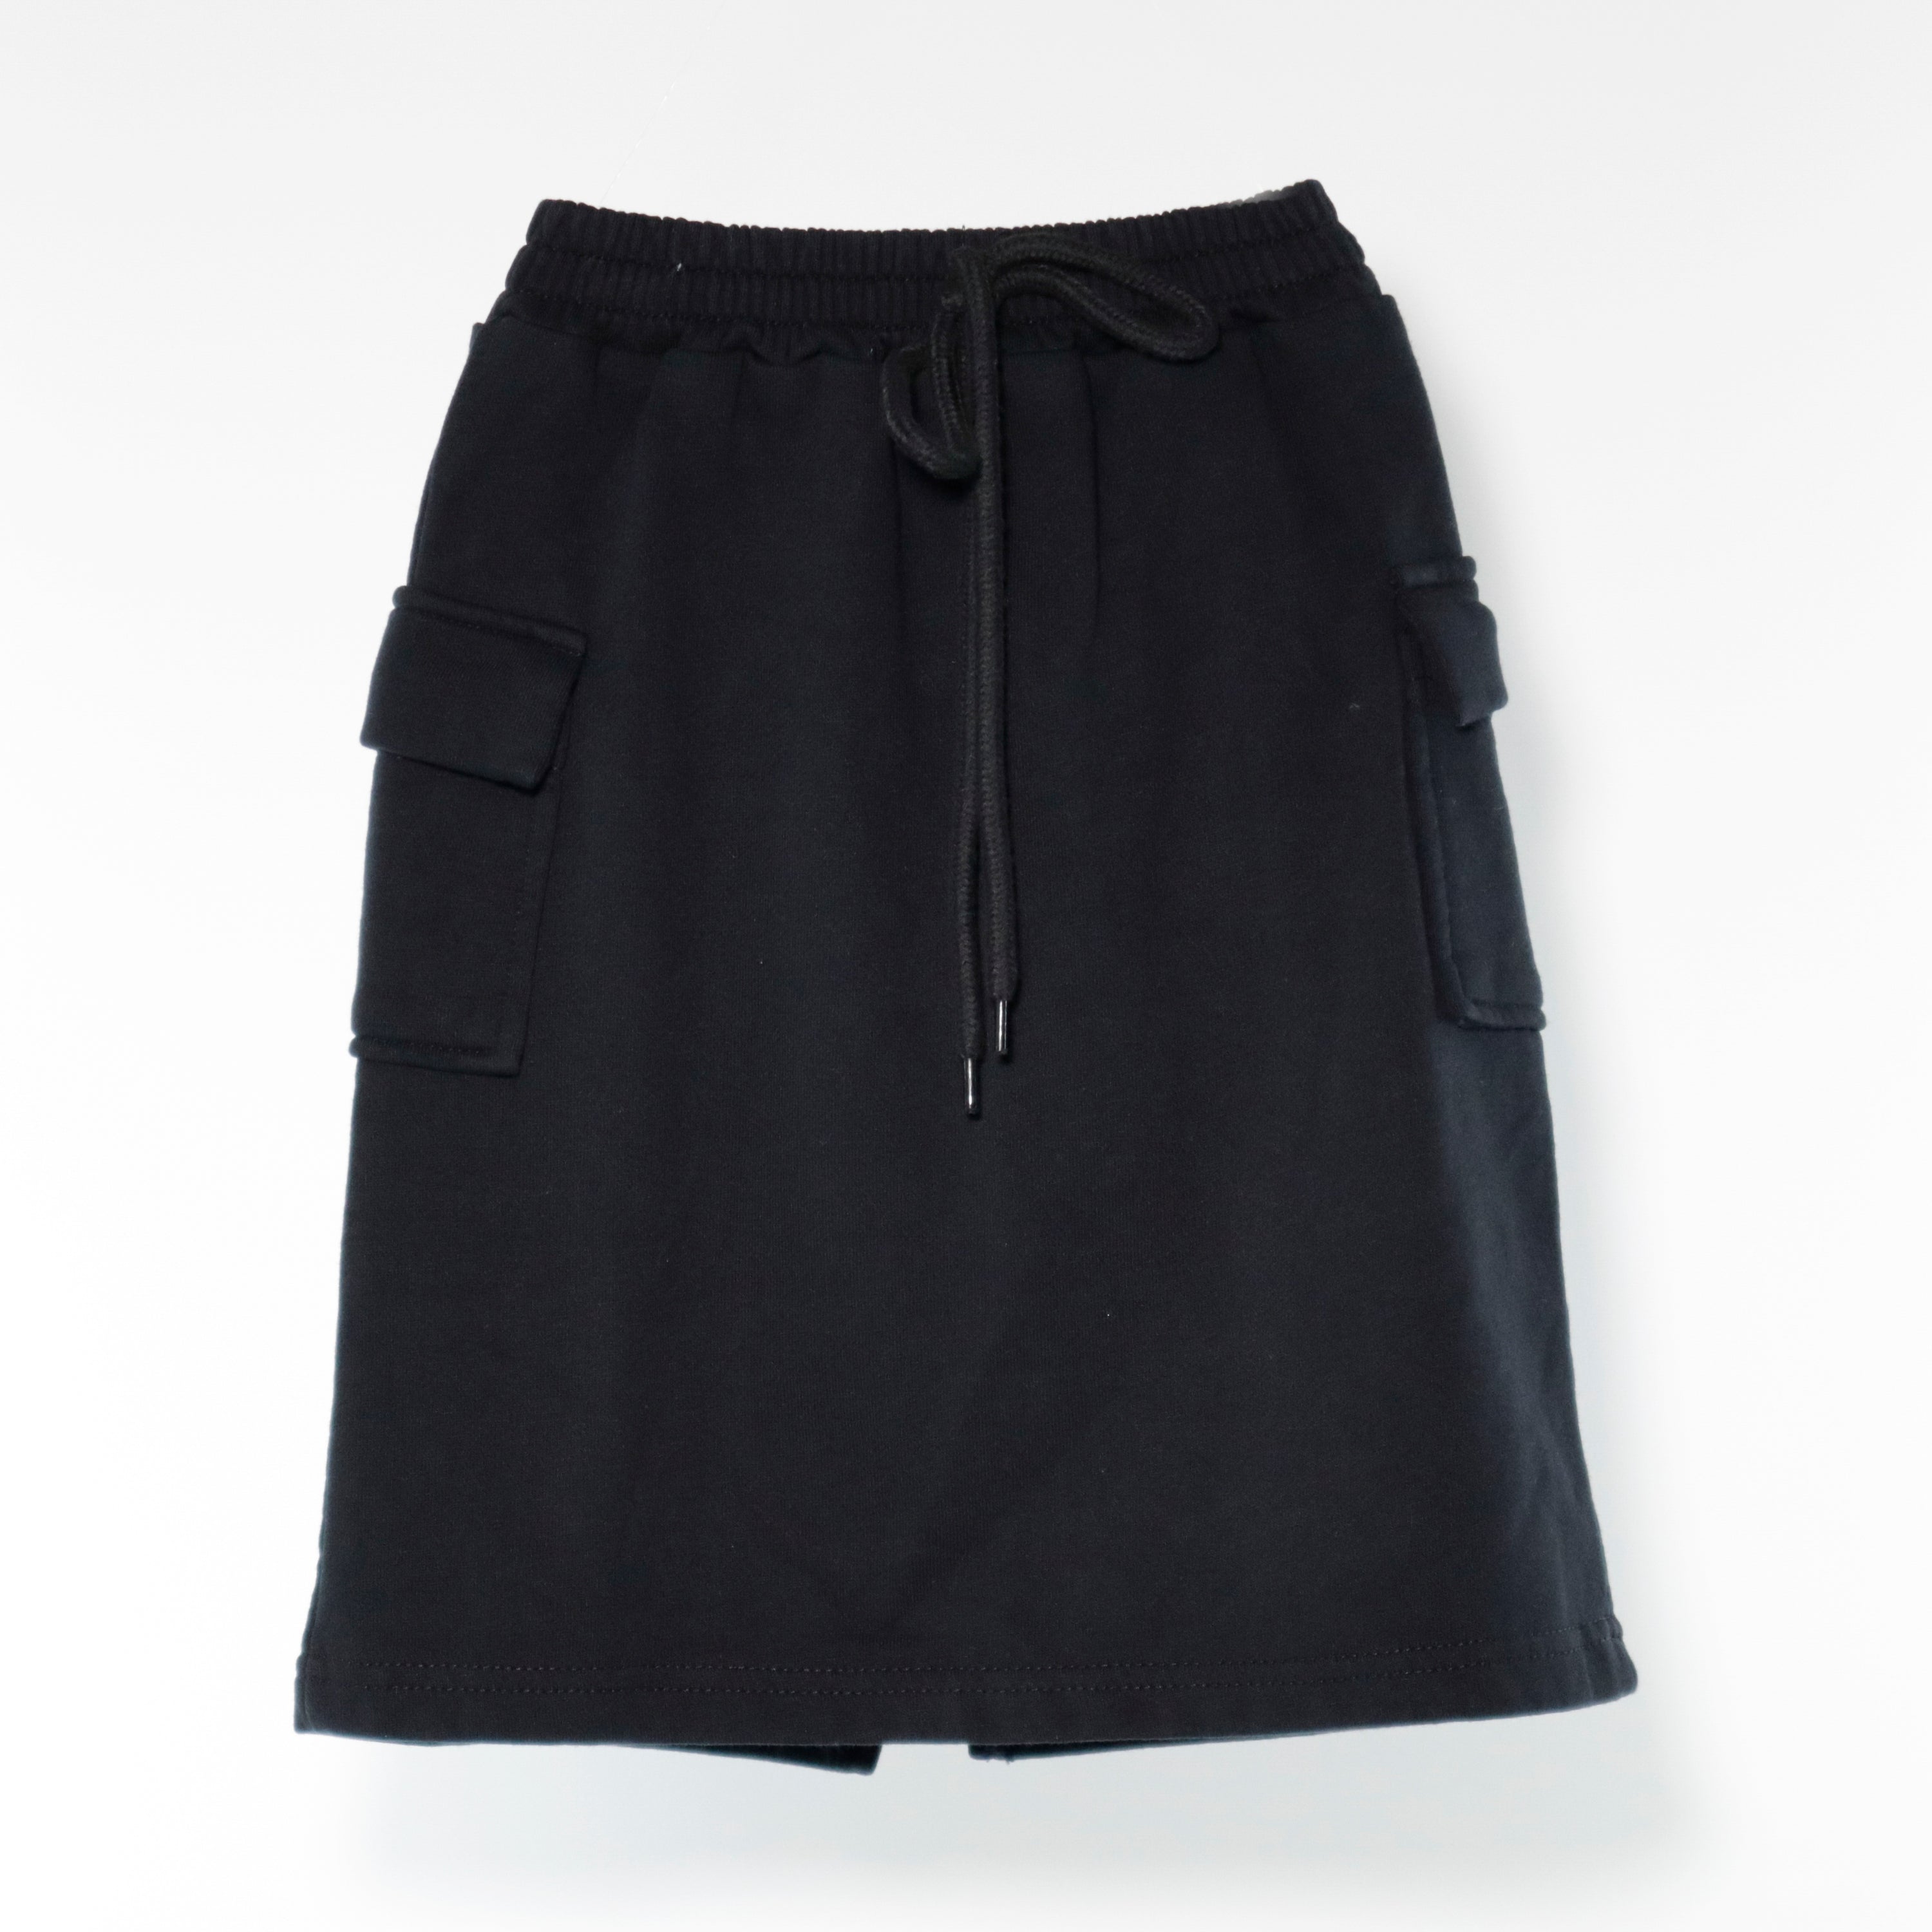 HEMI Elasticated Skirt (Ready Stock)